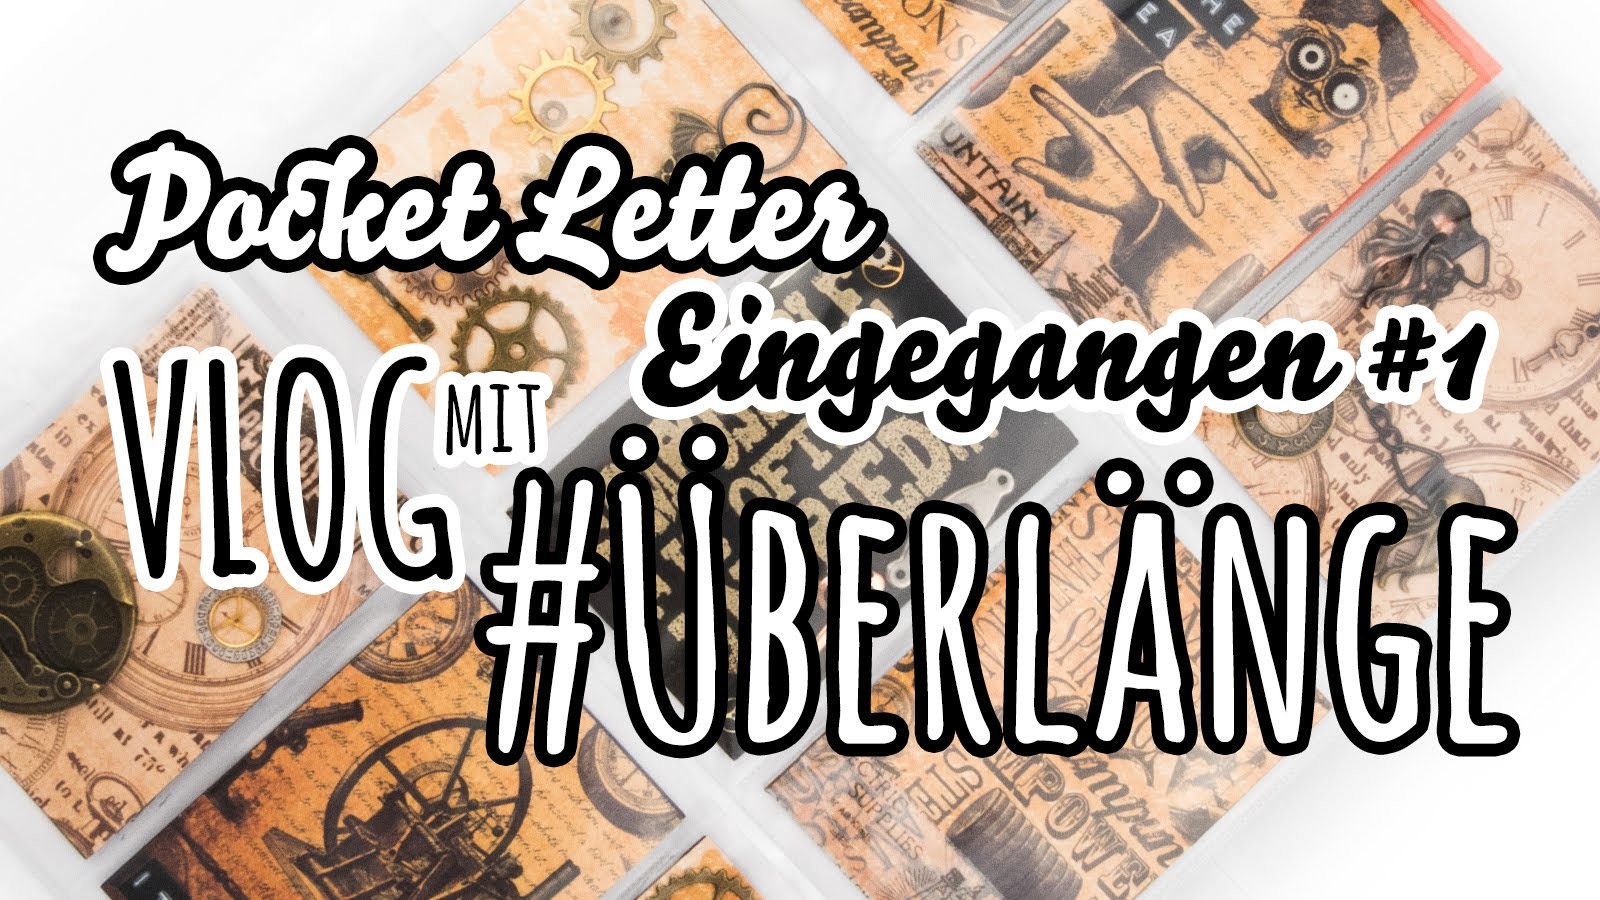 [VLOG mit #Überlänge] Eingegangene Pocket Letter #1 | EURE Post :)